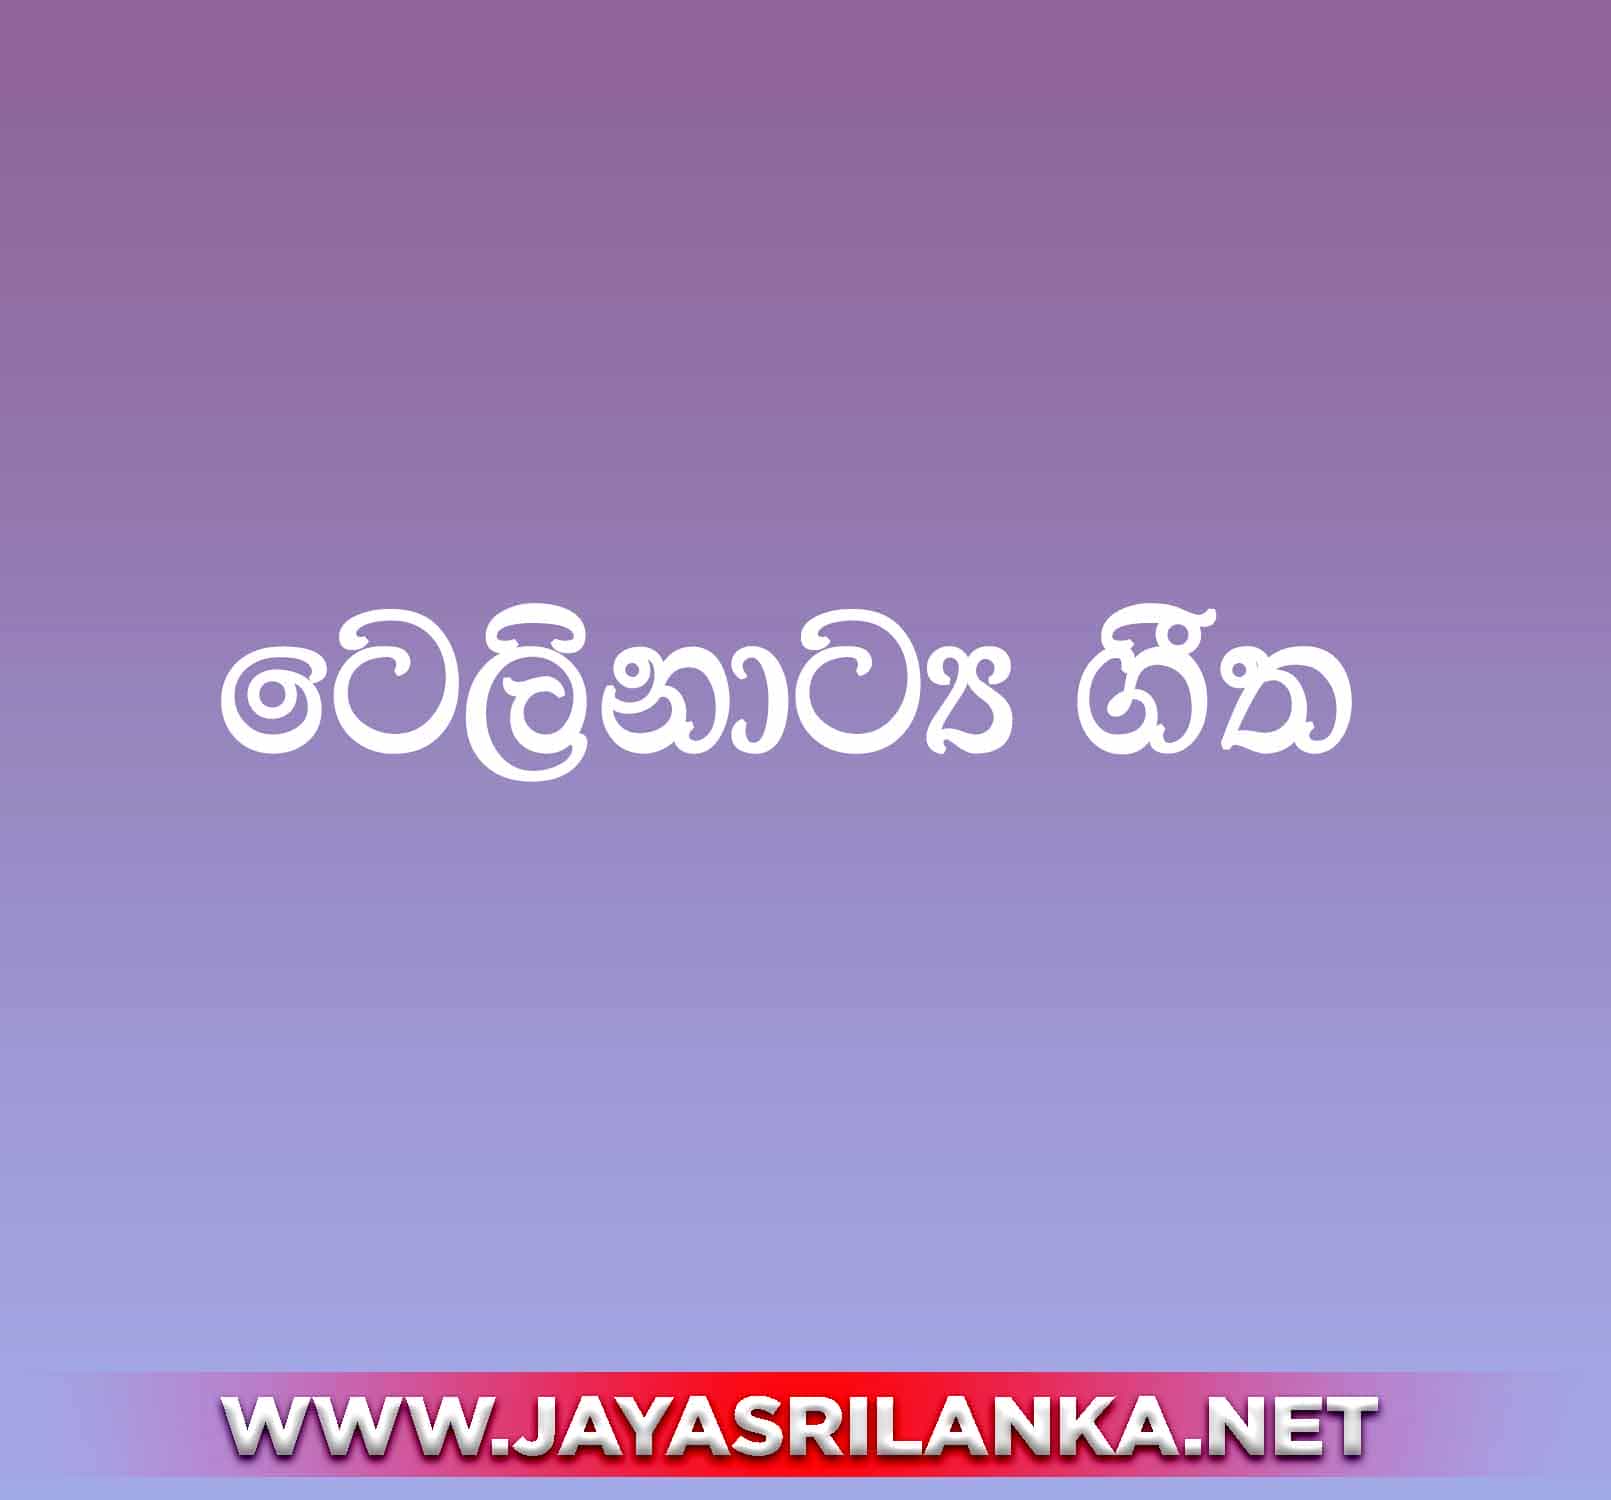 Ahasatath Wada Dura Athata - Sinhala Teledrama Songs mp3 Image